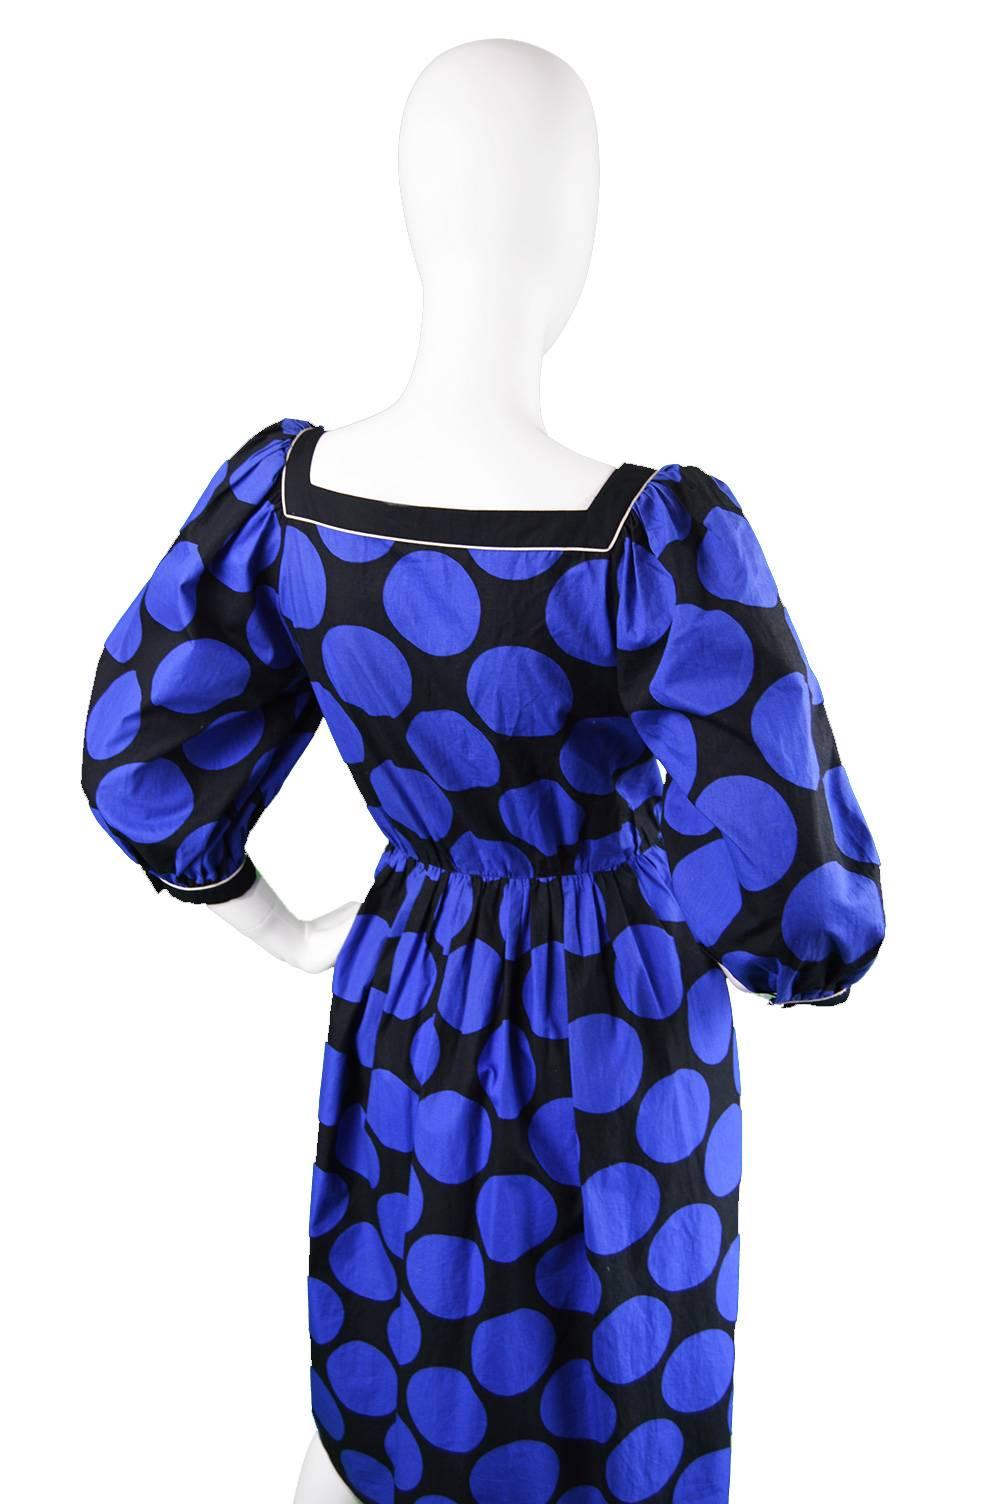 Women's 1980s Vintage Louis Feraud Black & Blue Puff Sleeve Dress with Polka Dot Print